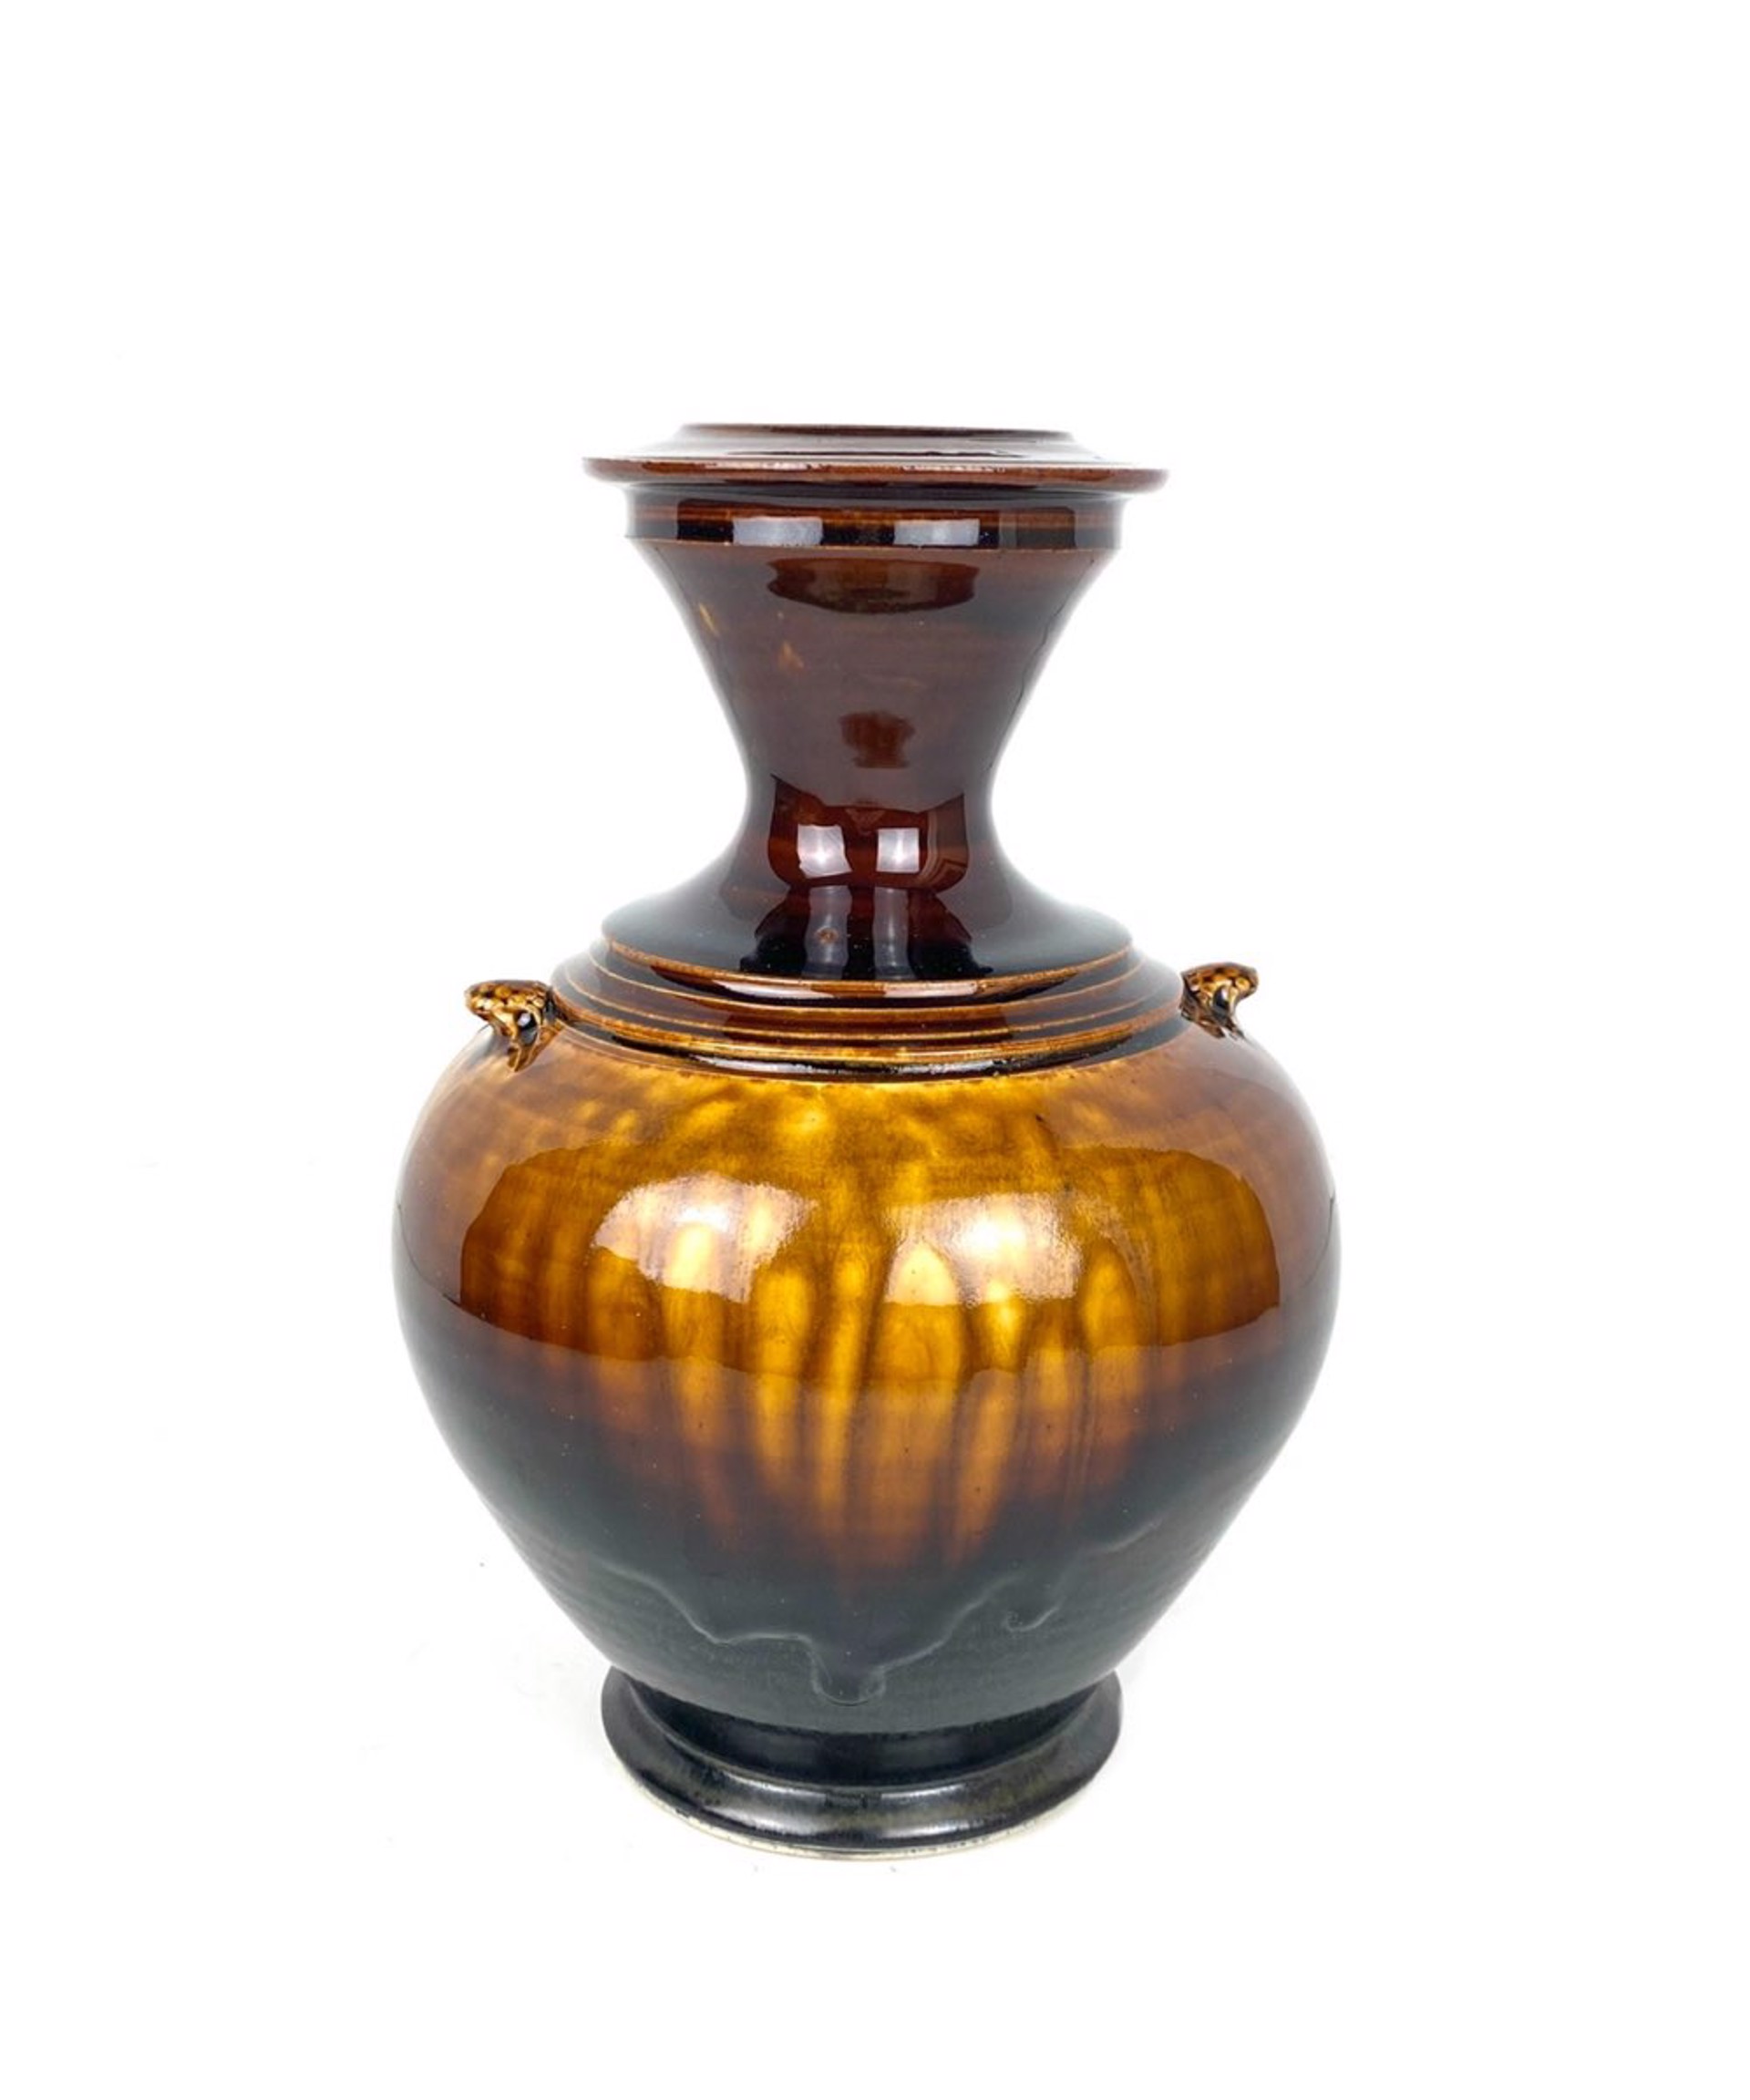 Bottle Vase by Richard Aerni